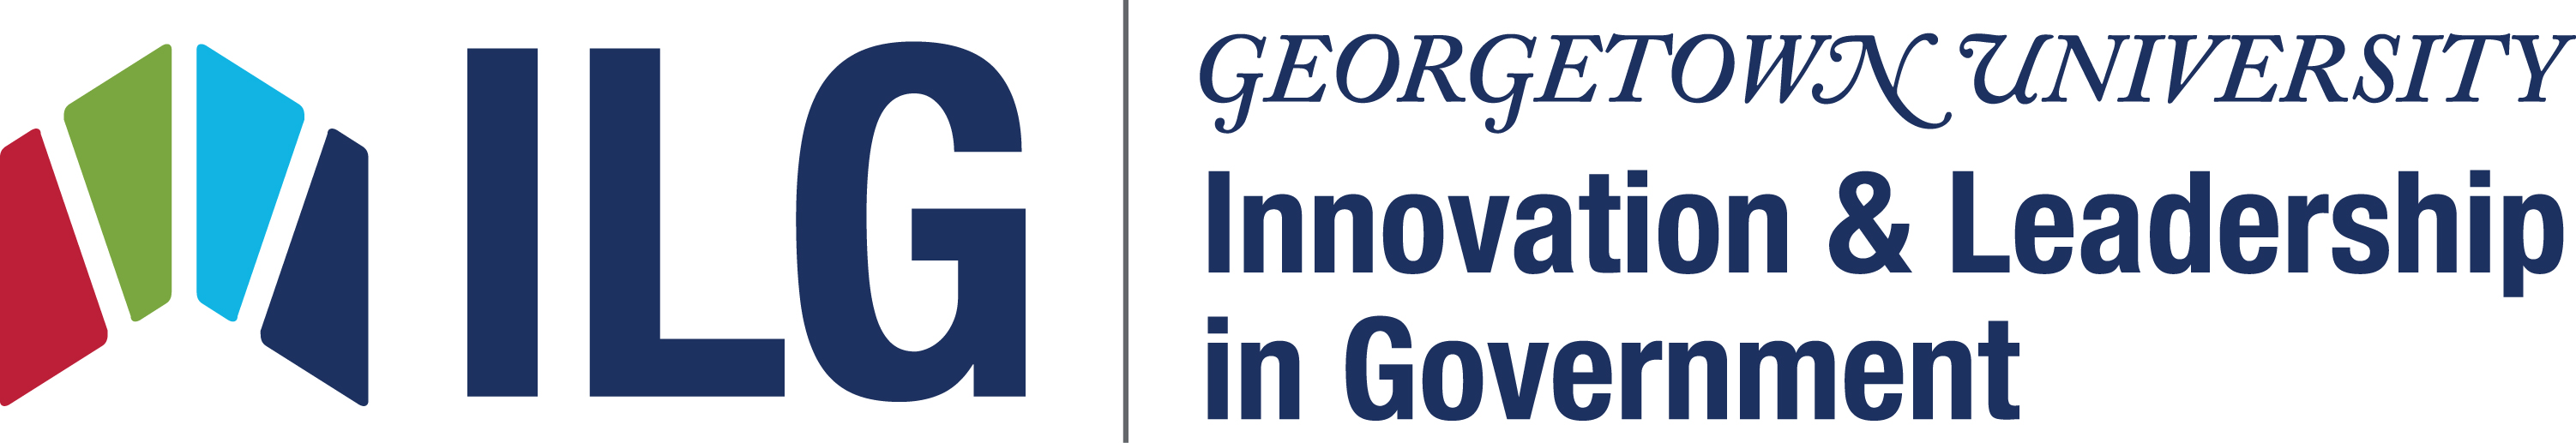 Innovation & Leadership in Government Program logo